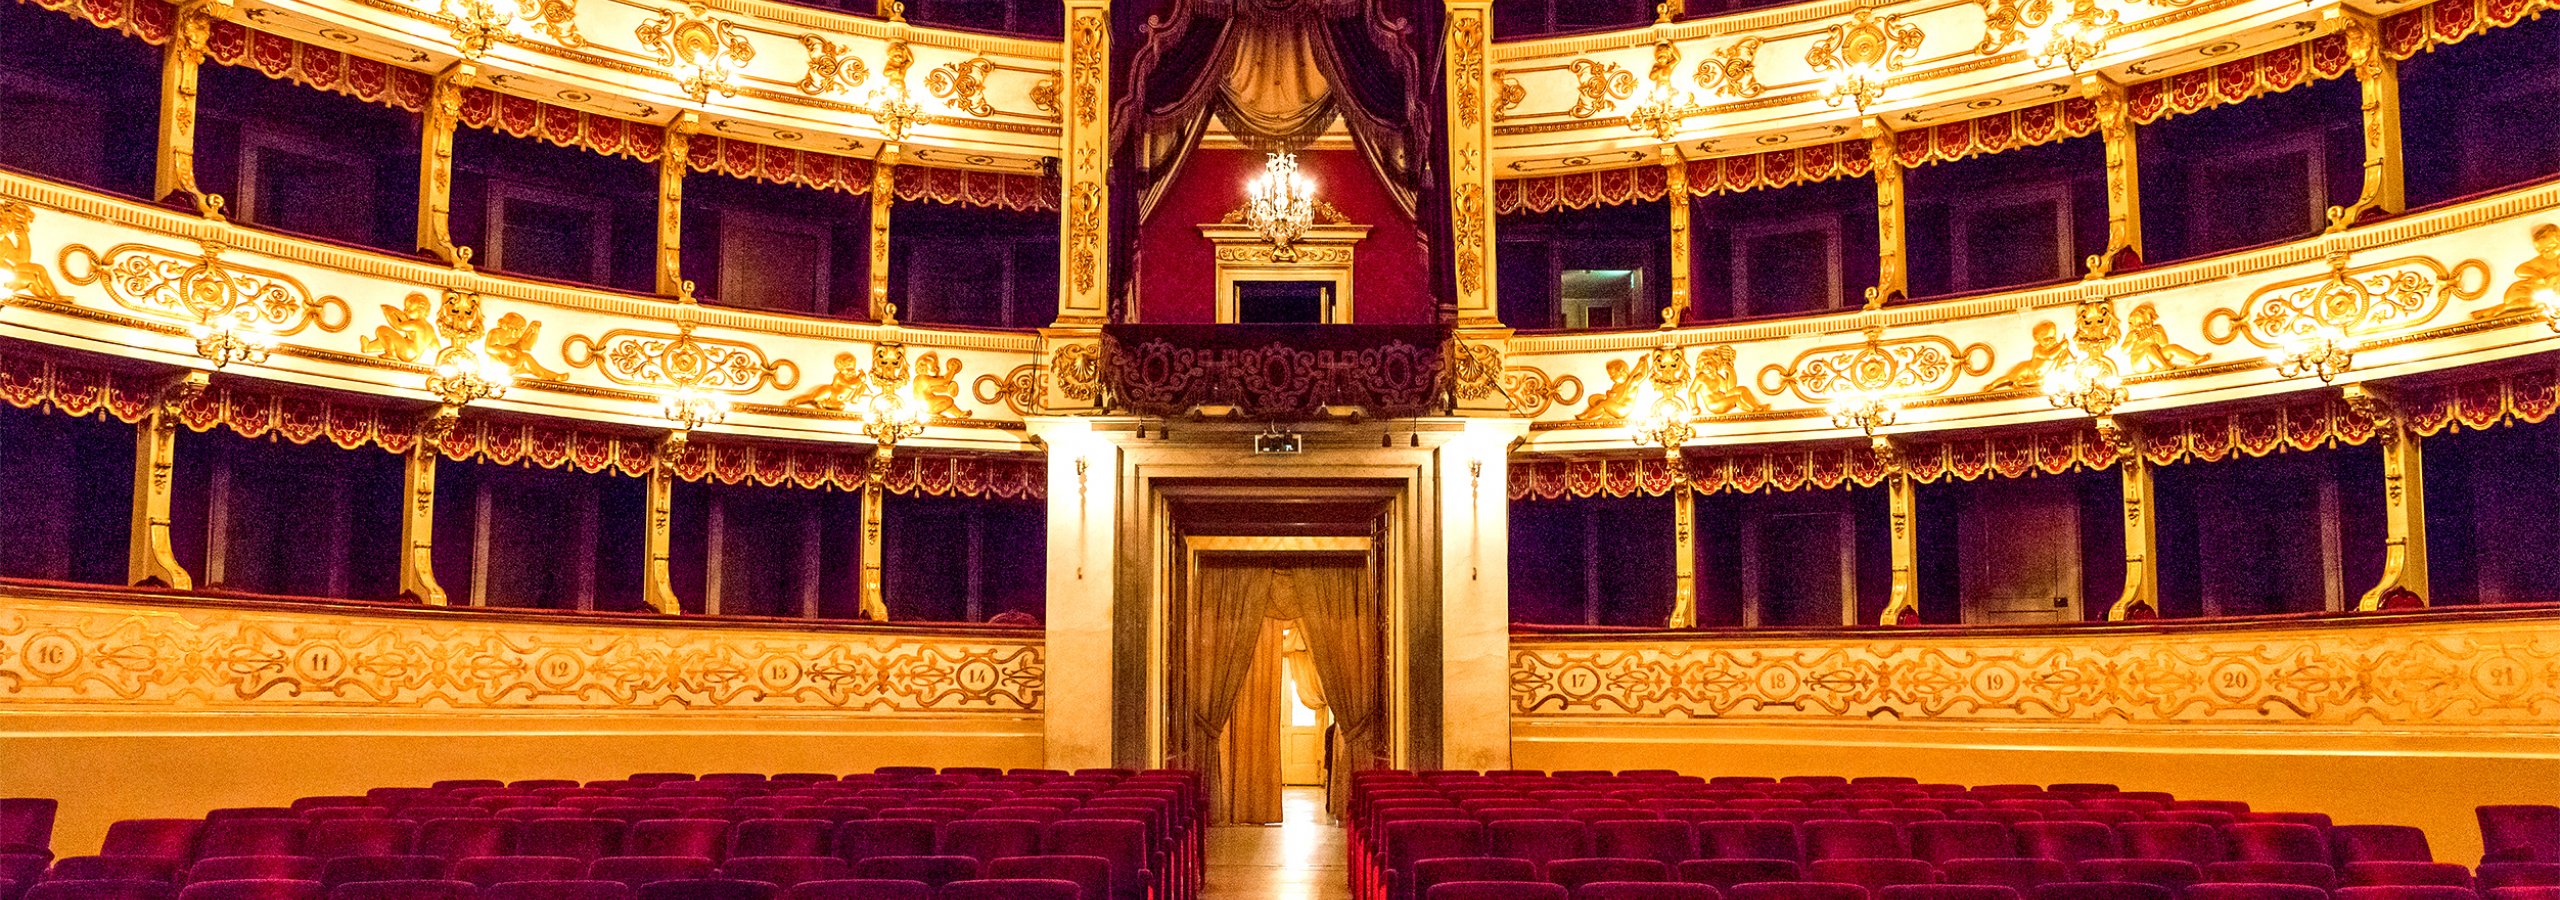 Parma Theatre smaller2